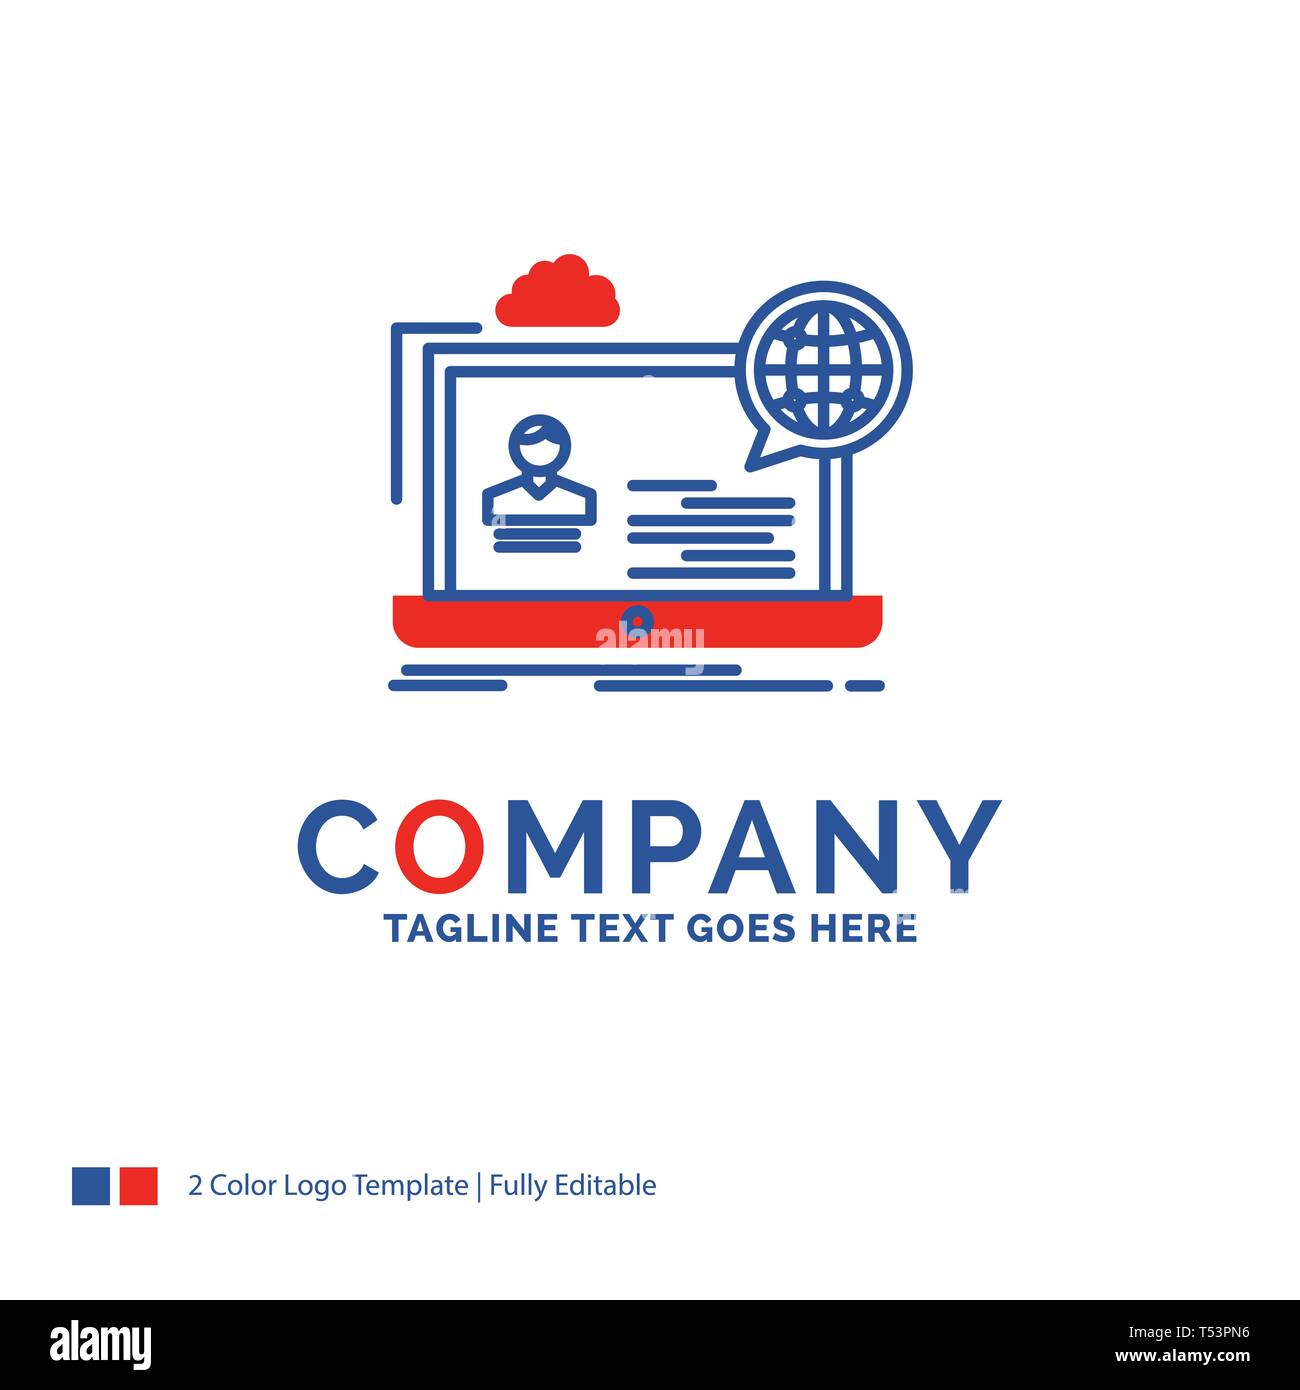 Company Name Logo Design For Webinar Forum Online Seminar